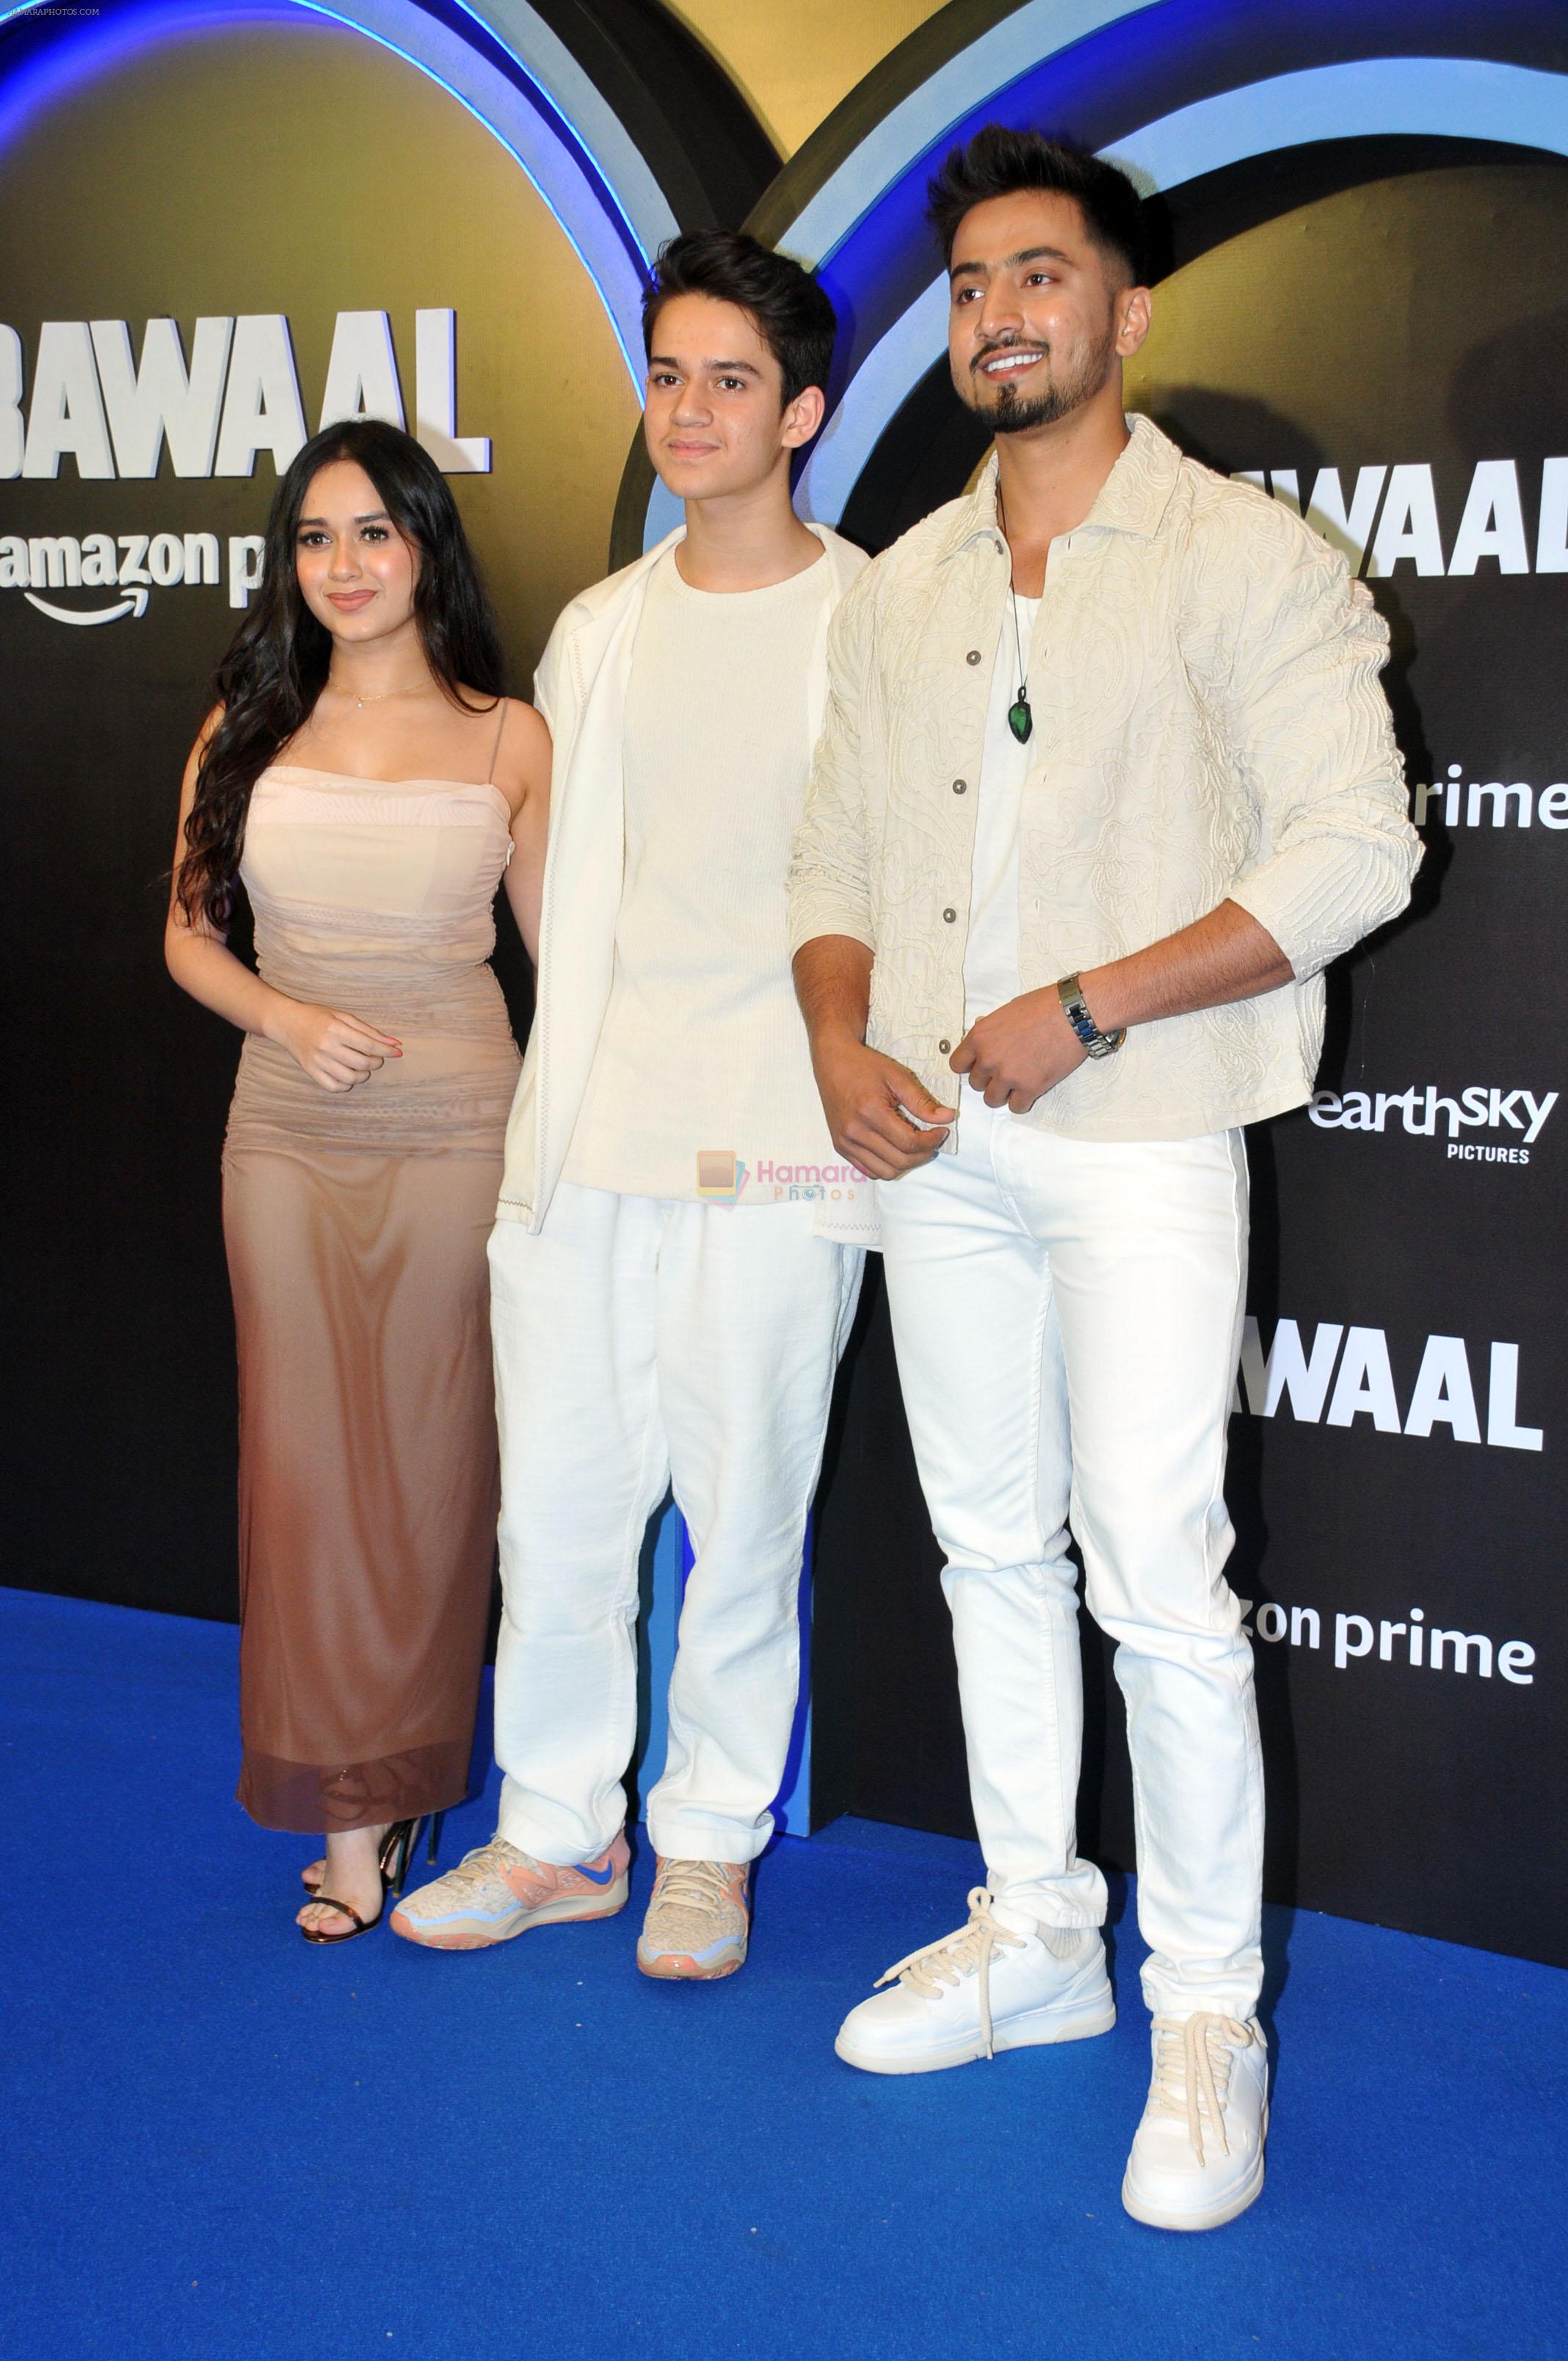 Ayaan Zubair Rahmani, Jannat Zubair Rahmani, Mr. Faisu at Bawaal movie premiere on 18 July 2023